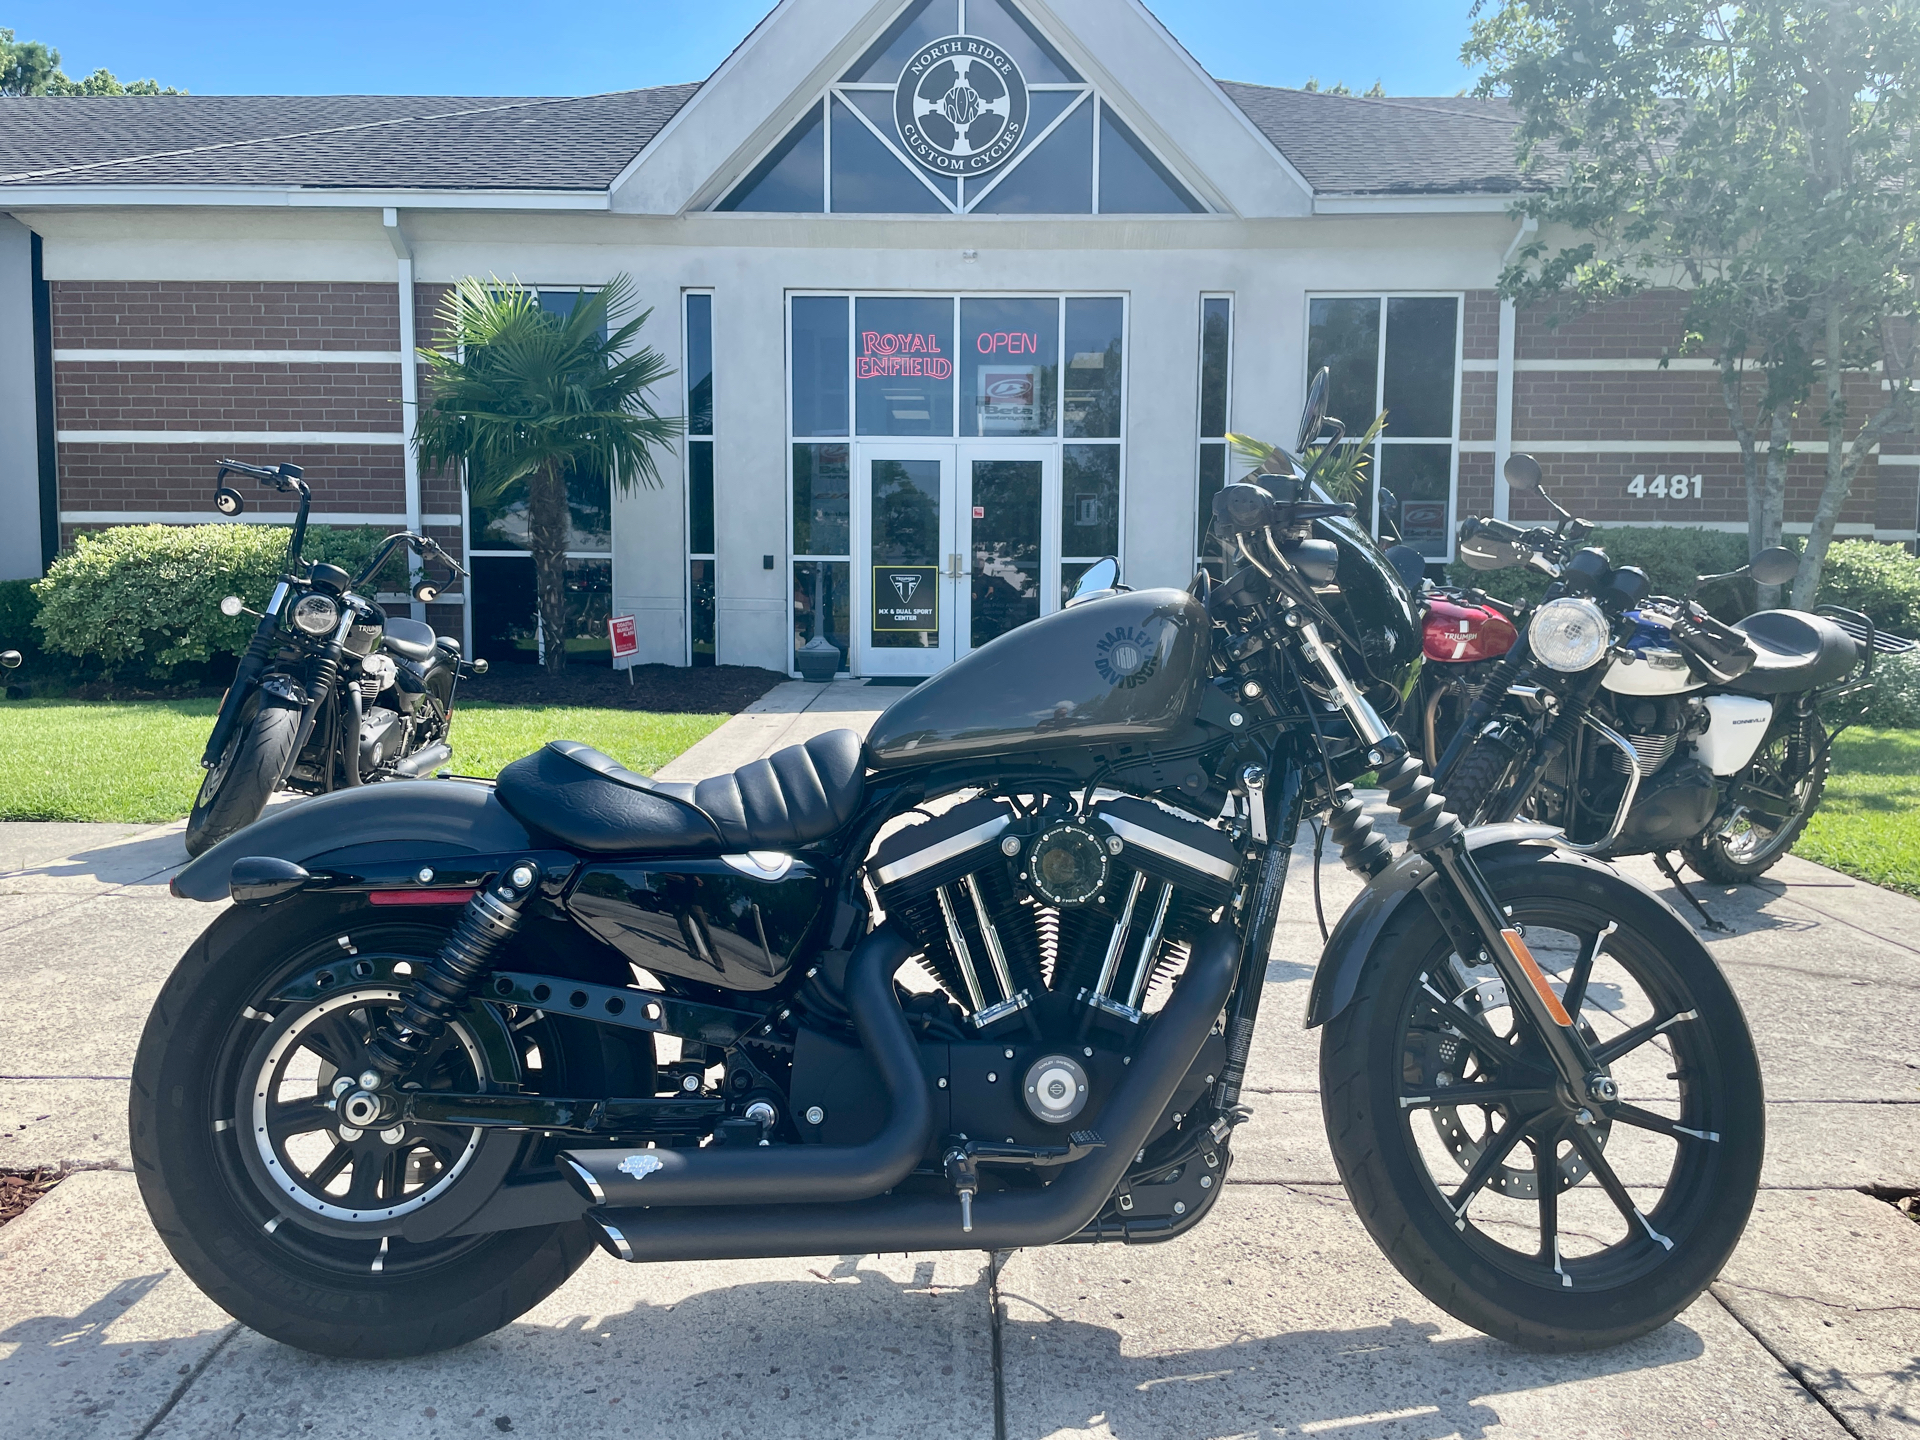 2019 Harley-Davidson Iron 883™ in North Charleston, South Carolina - Photo 1